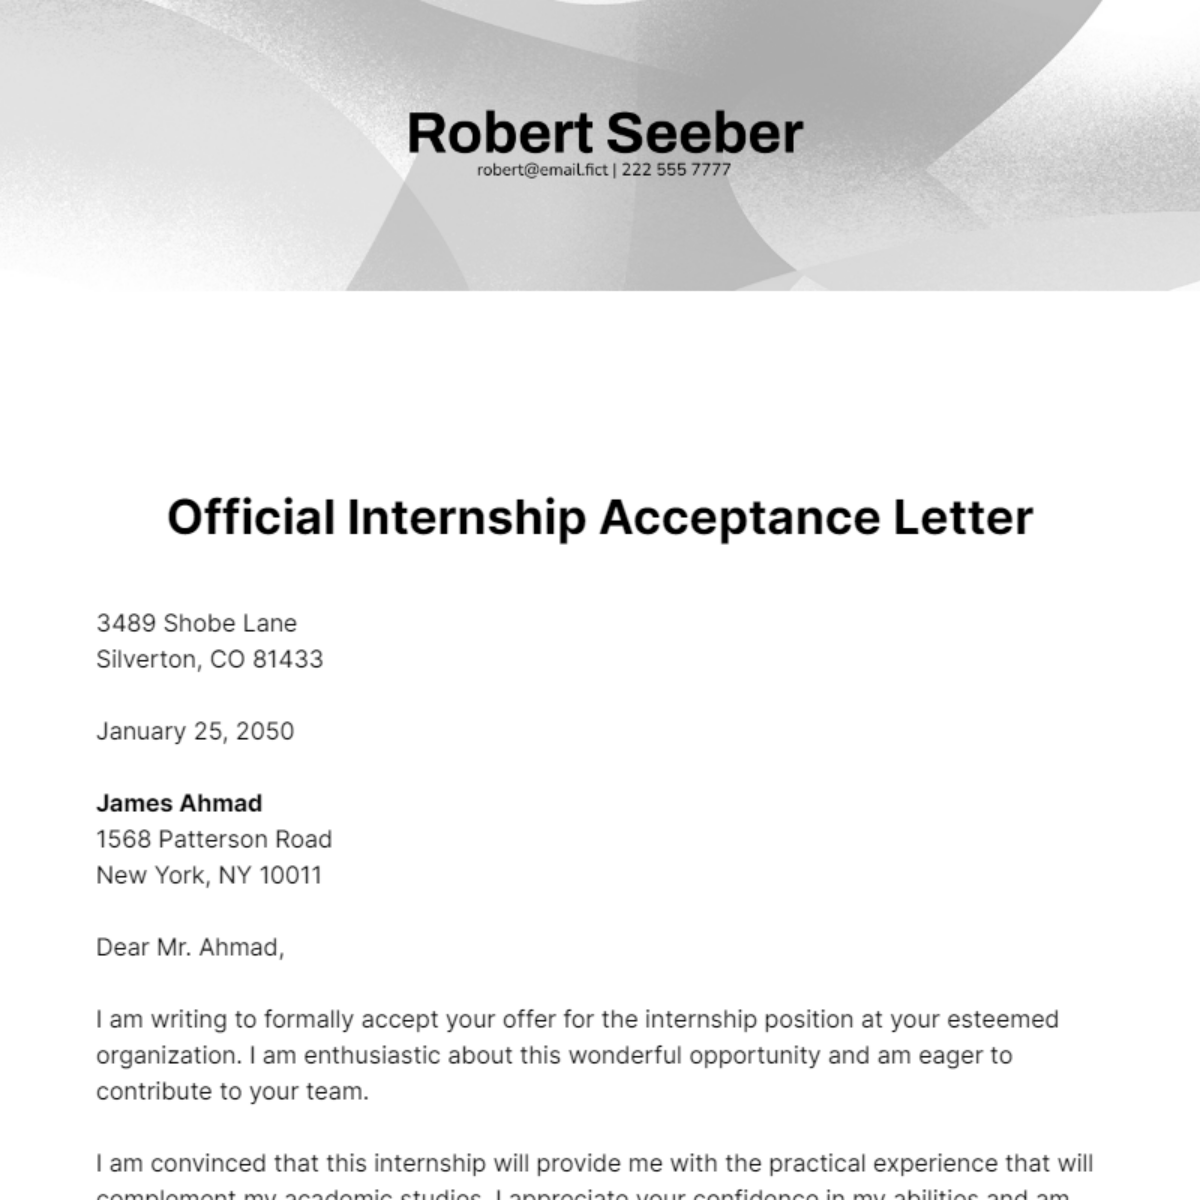 Official Internship Acceptance Letter Template